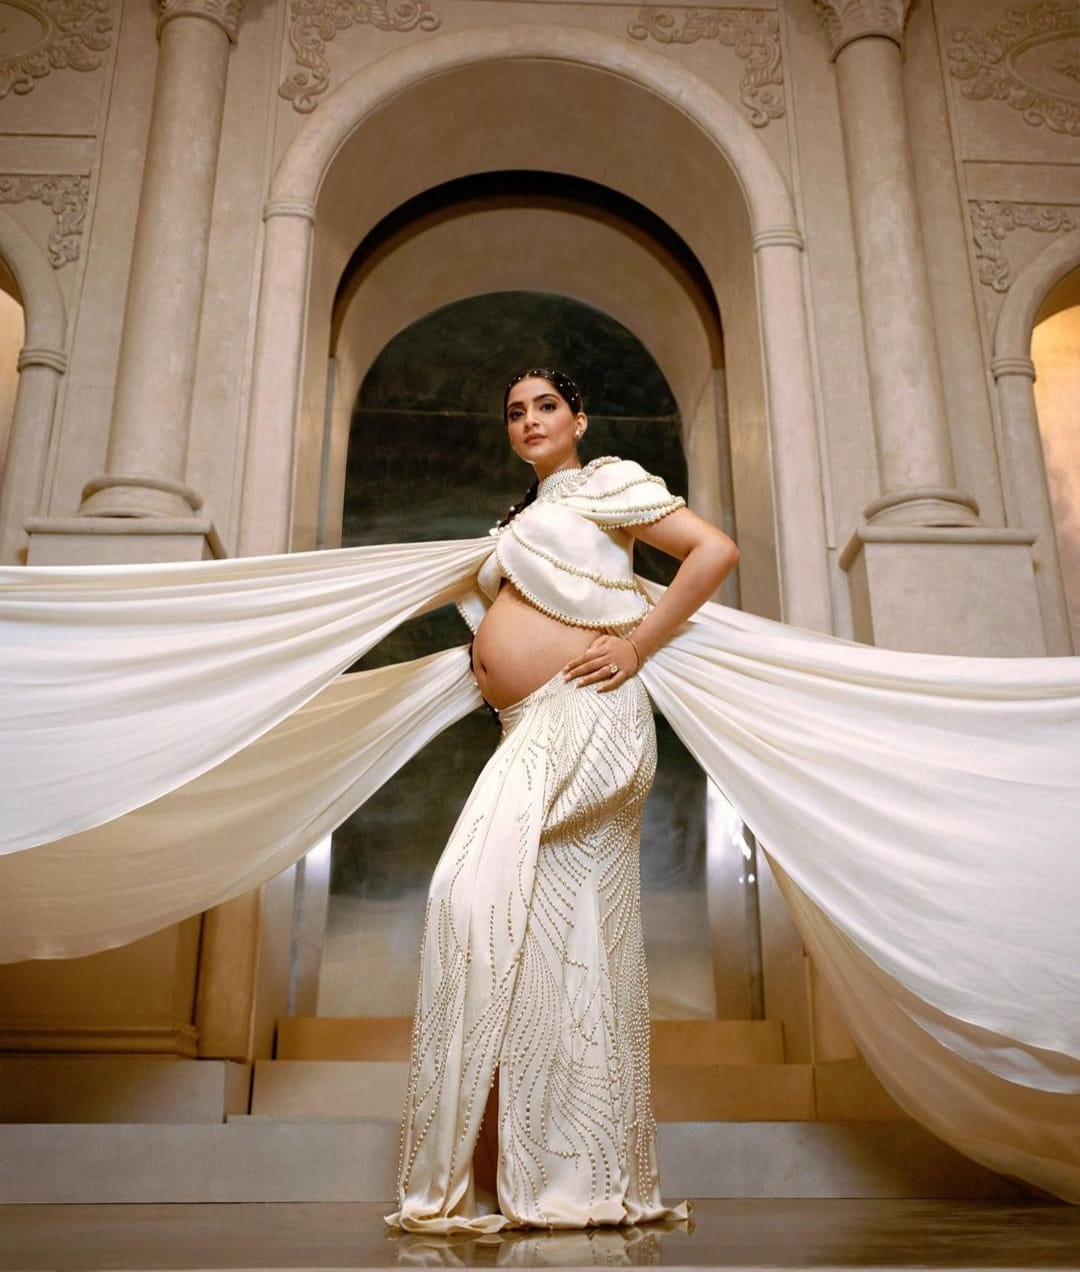 Swara Bhasker Supports TMC's Mahua Moitra Over Her 'Meat-Eating' Goddess  Remark Amid Kaali Row